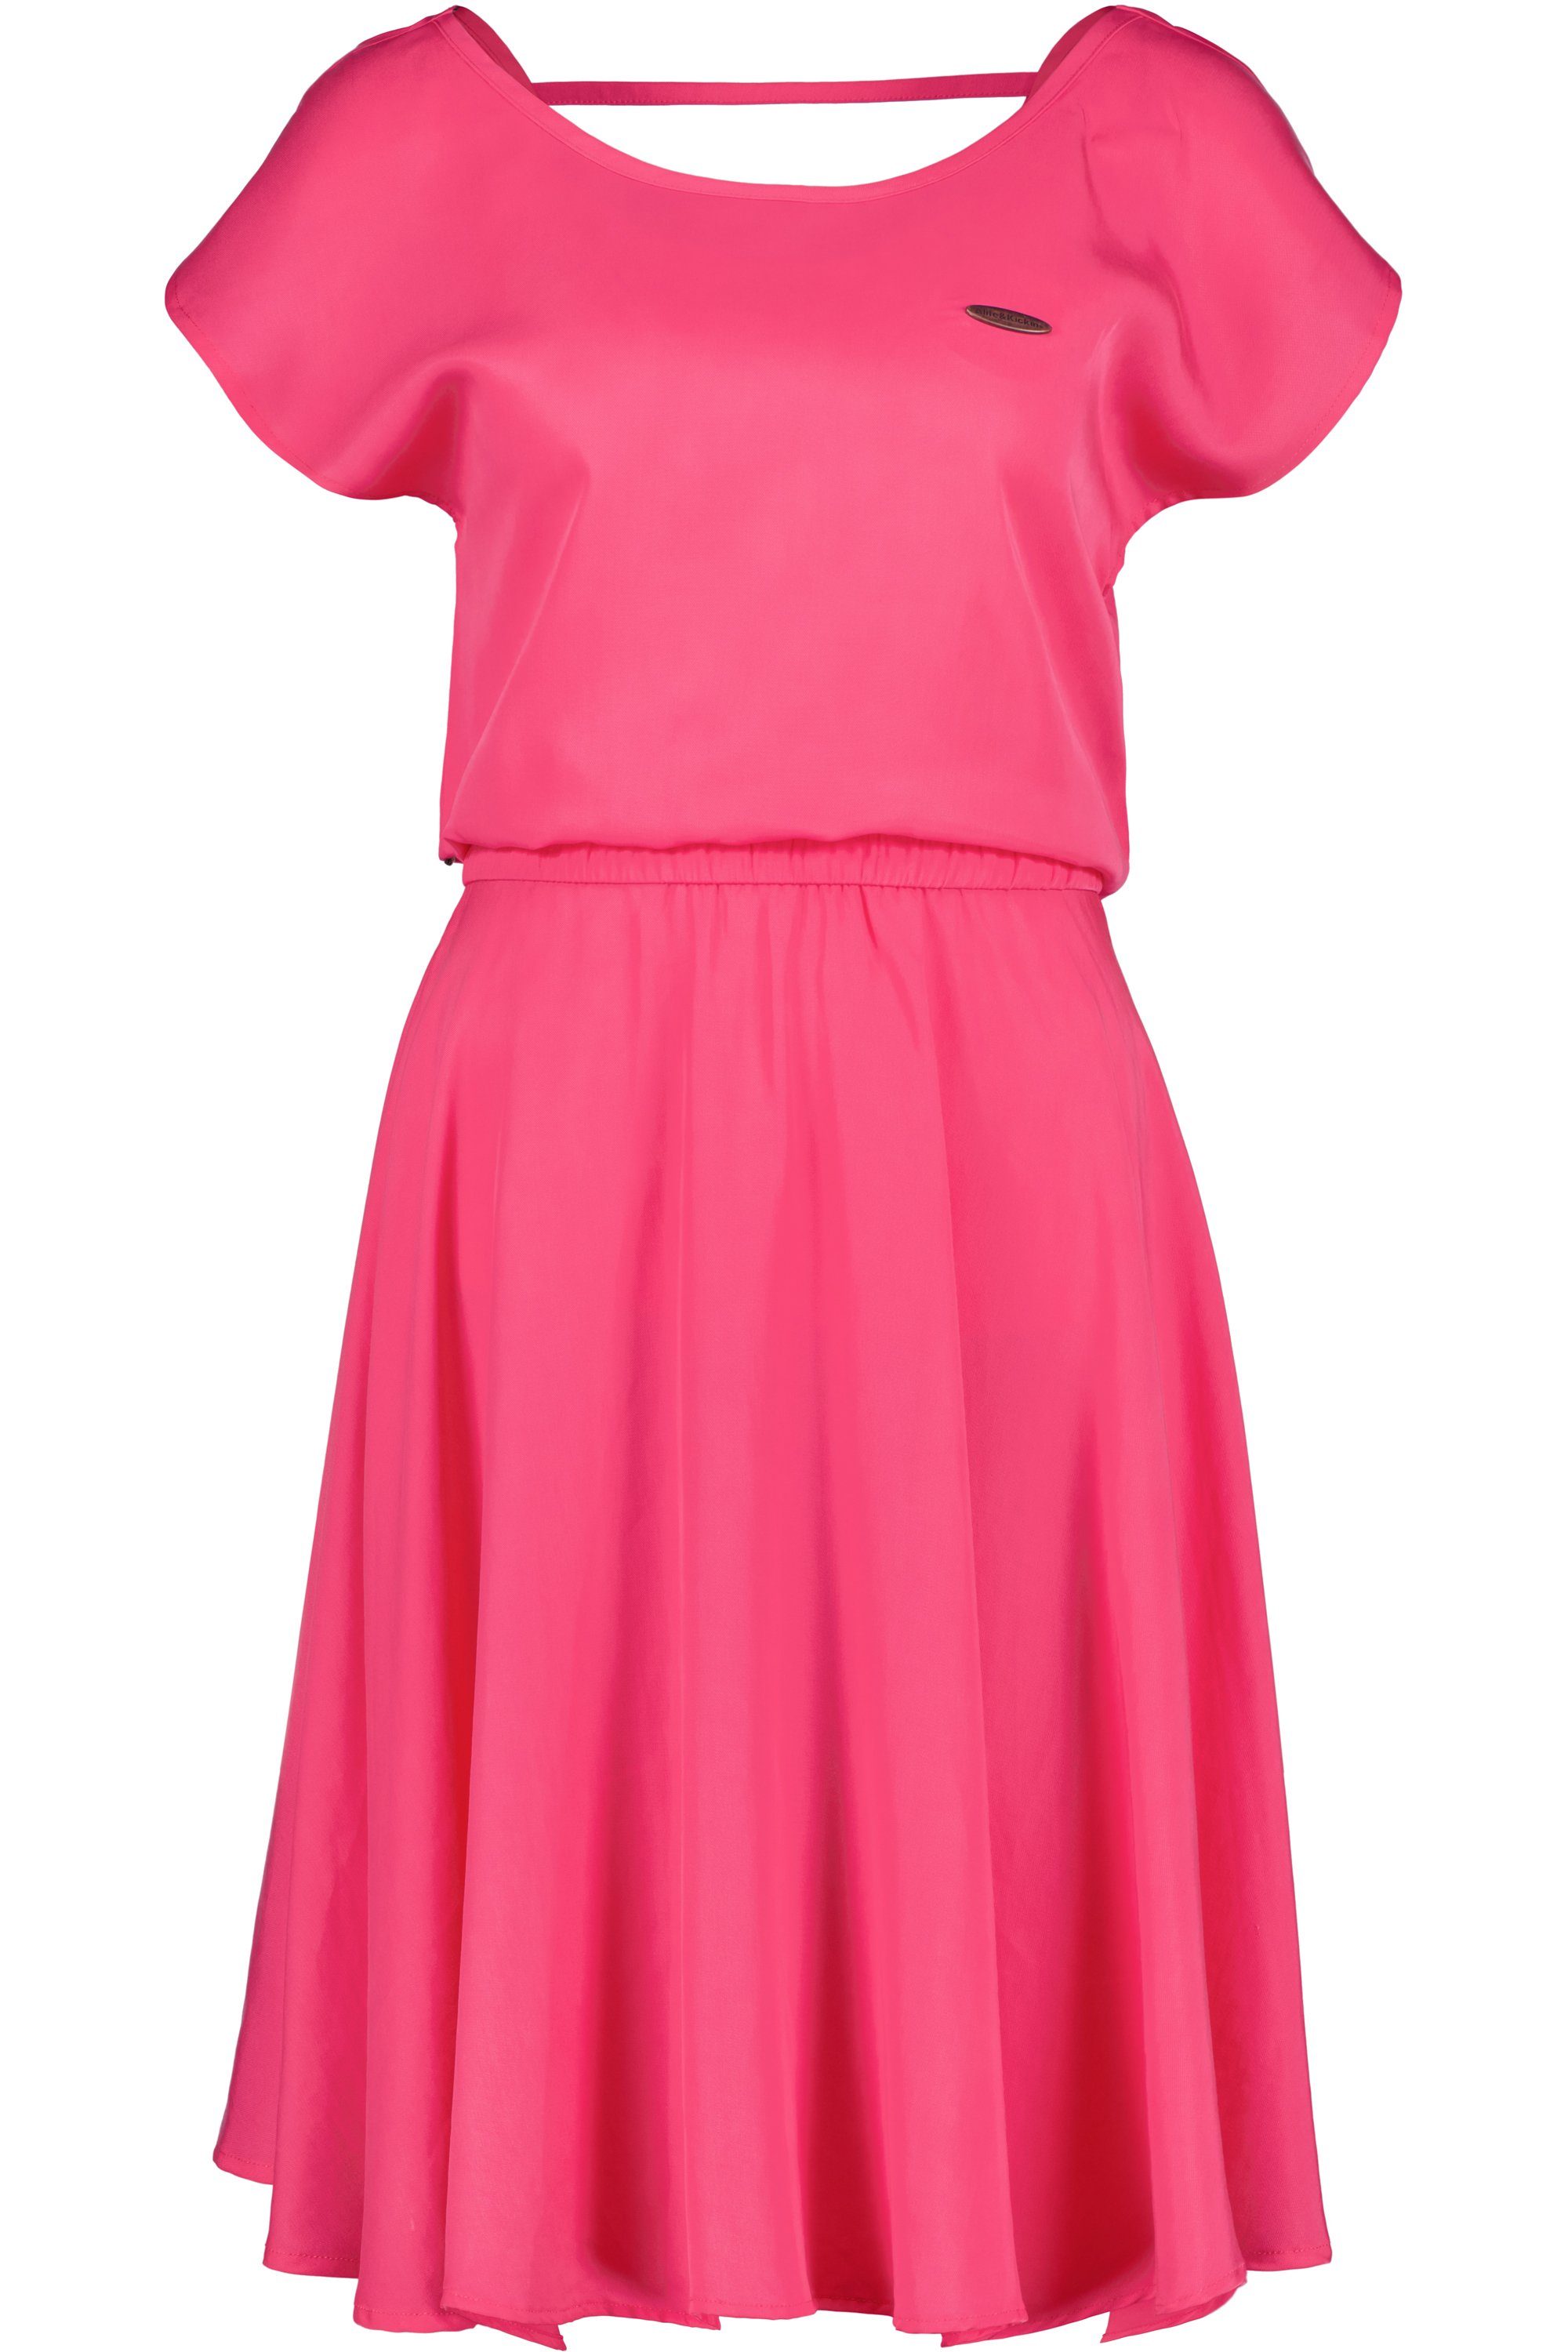 Alife & Kickin Jerseykleid IsabellaAK Sommerkleid, Damen Dress Kleid flamingo